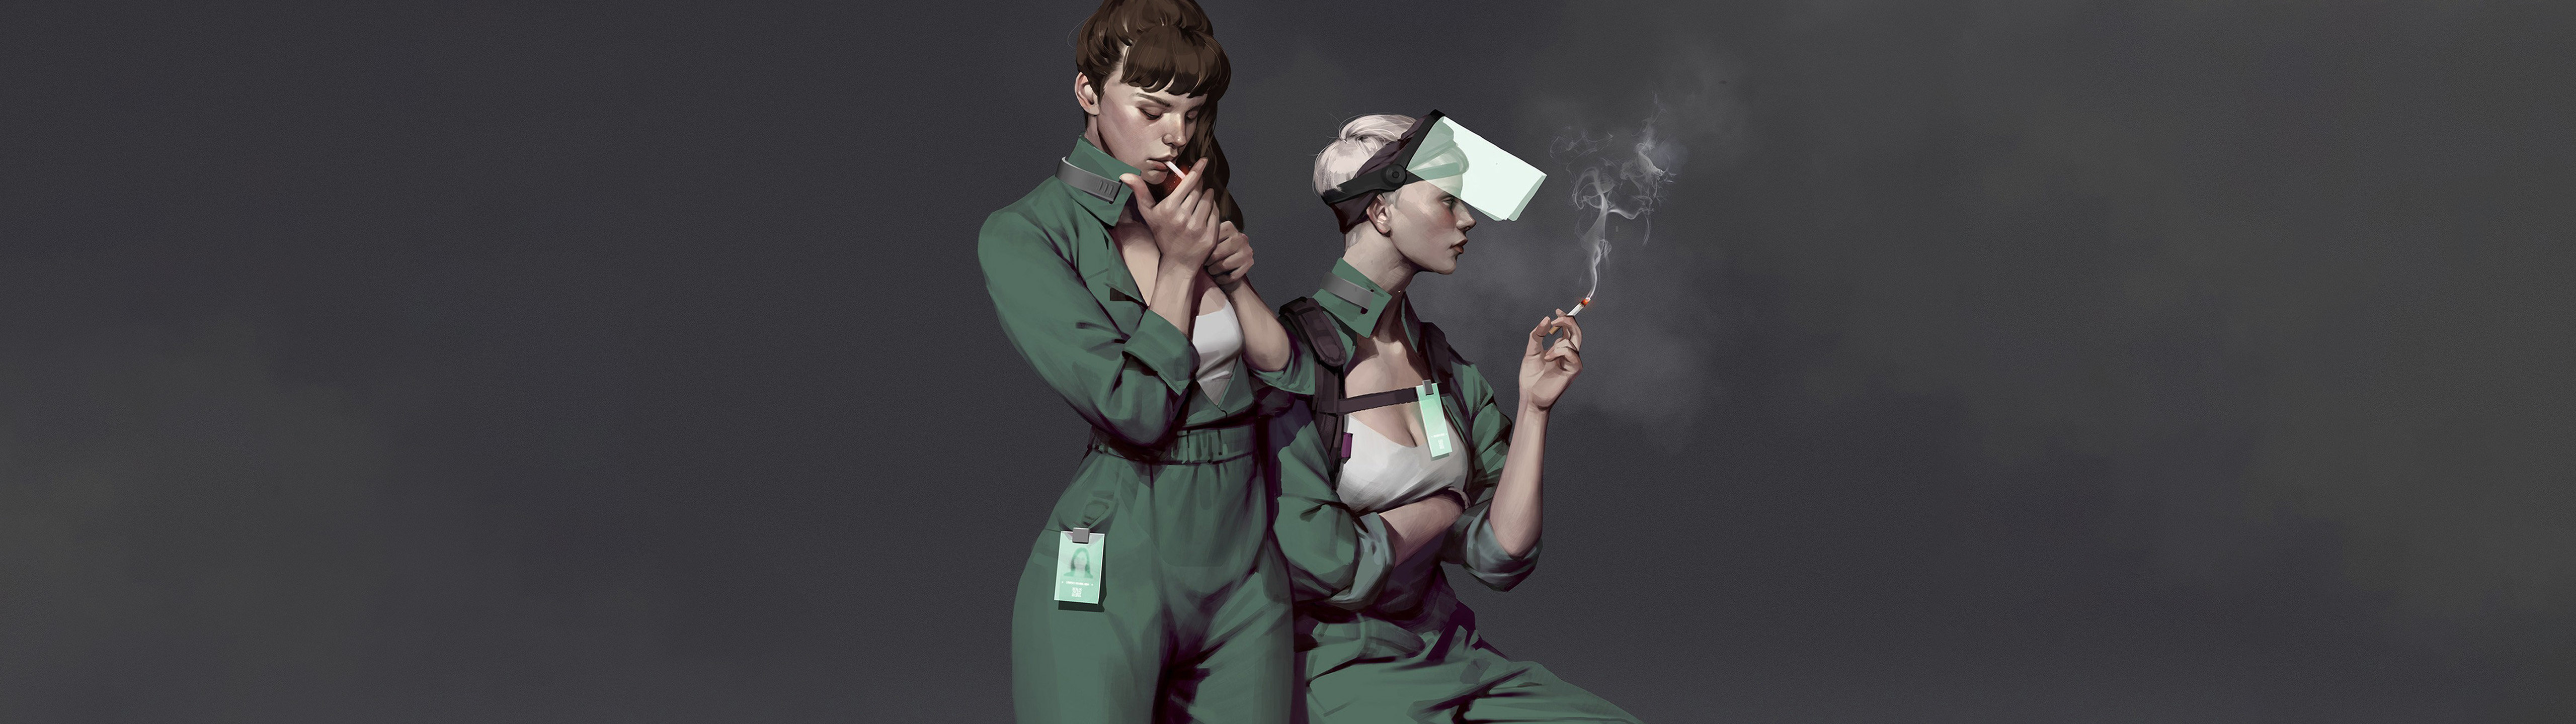 Ultrawide Digital Art Siwoo Kim Women Smoking Break Time 5120x1440